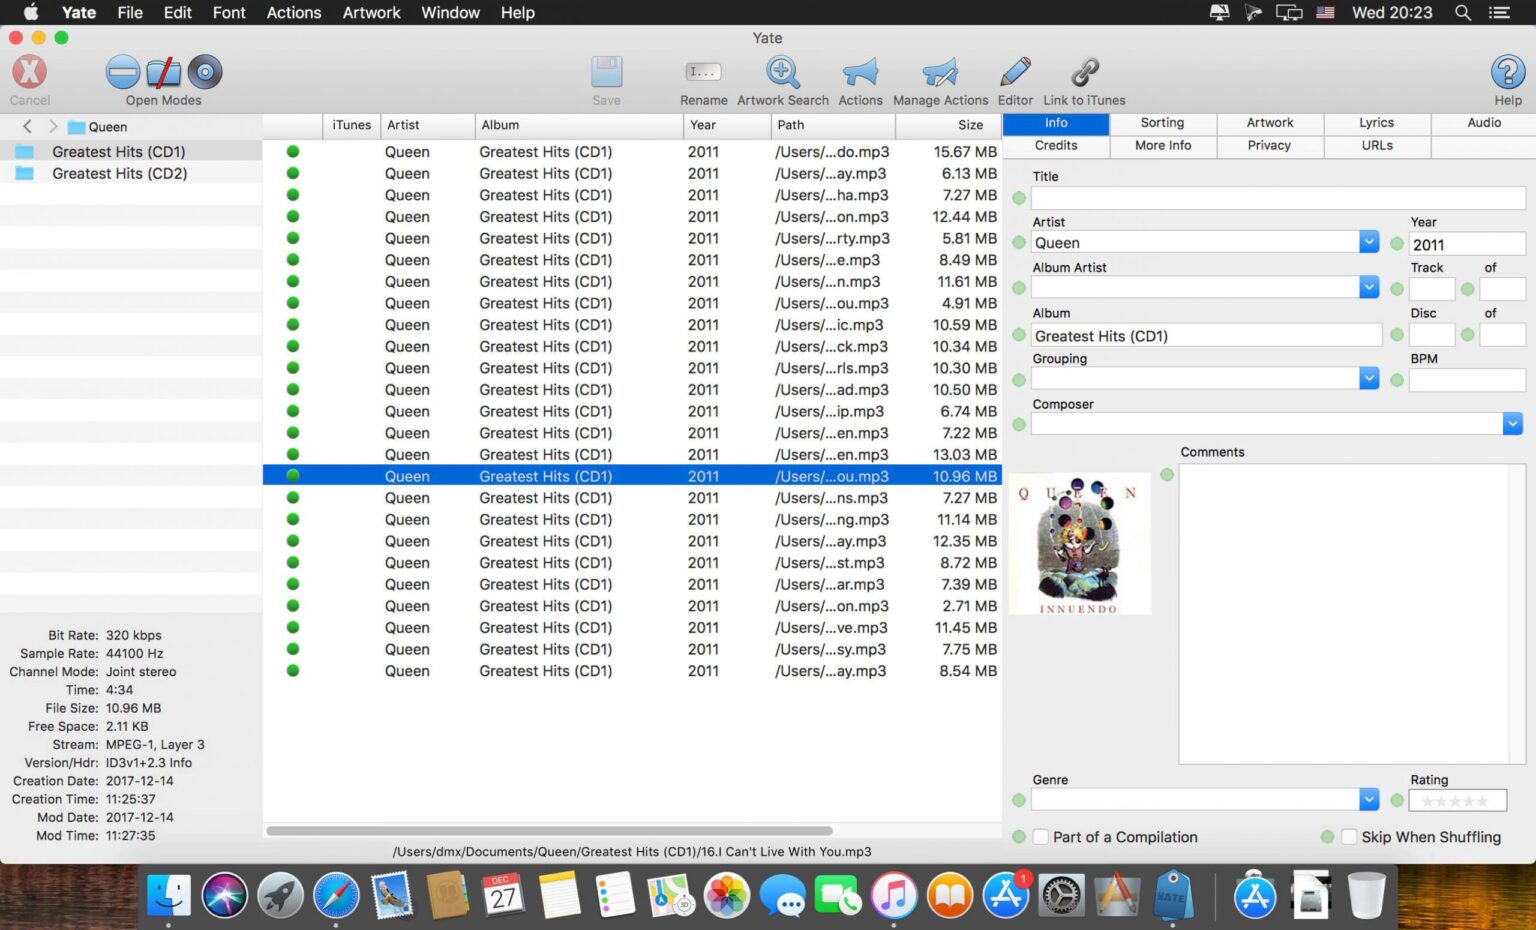 download tableplus mac